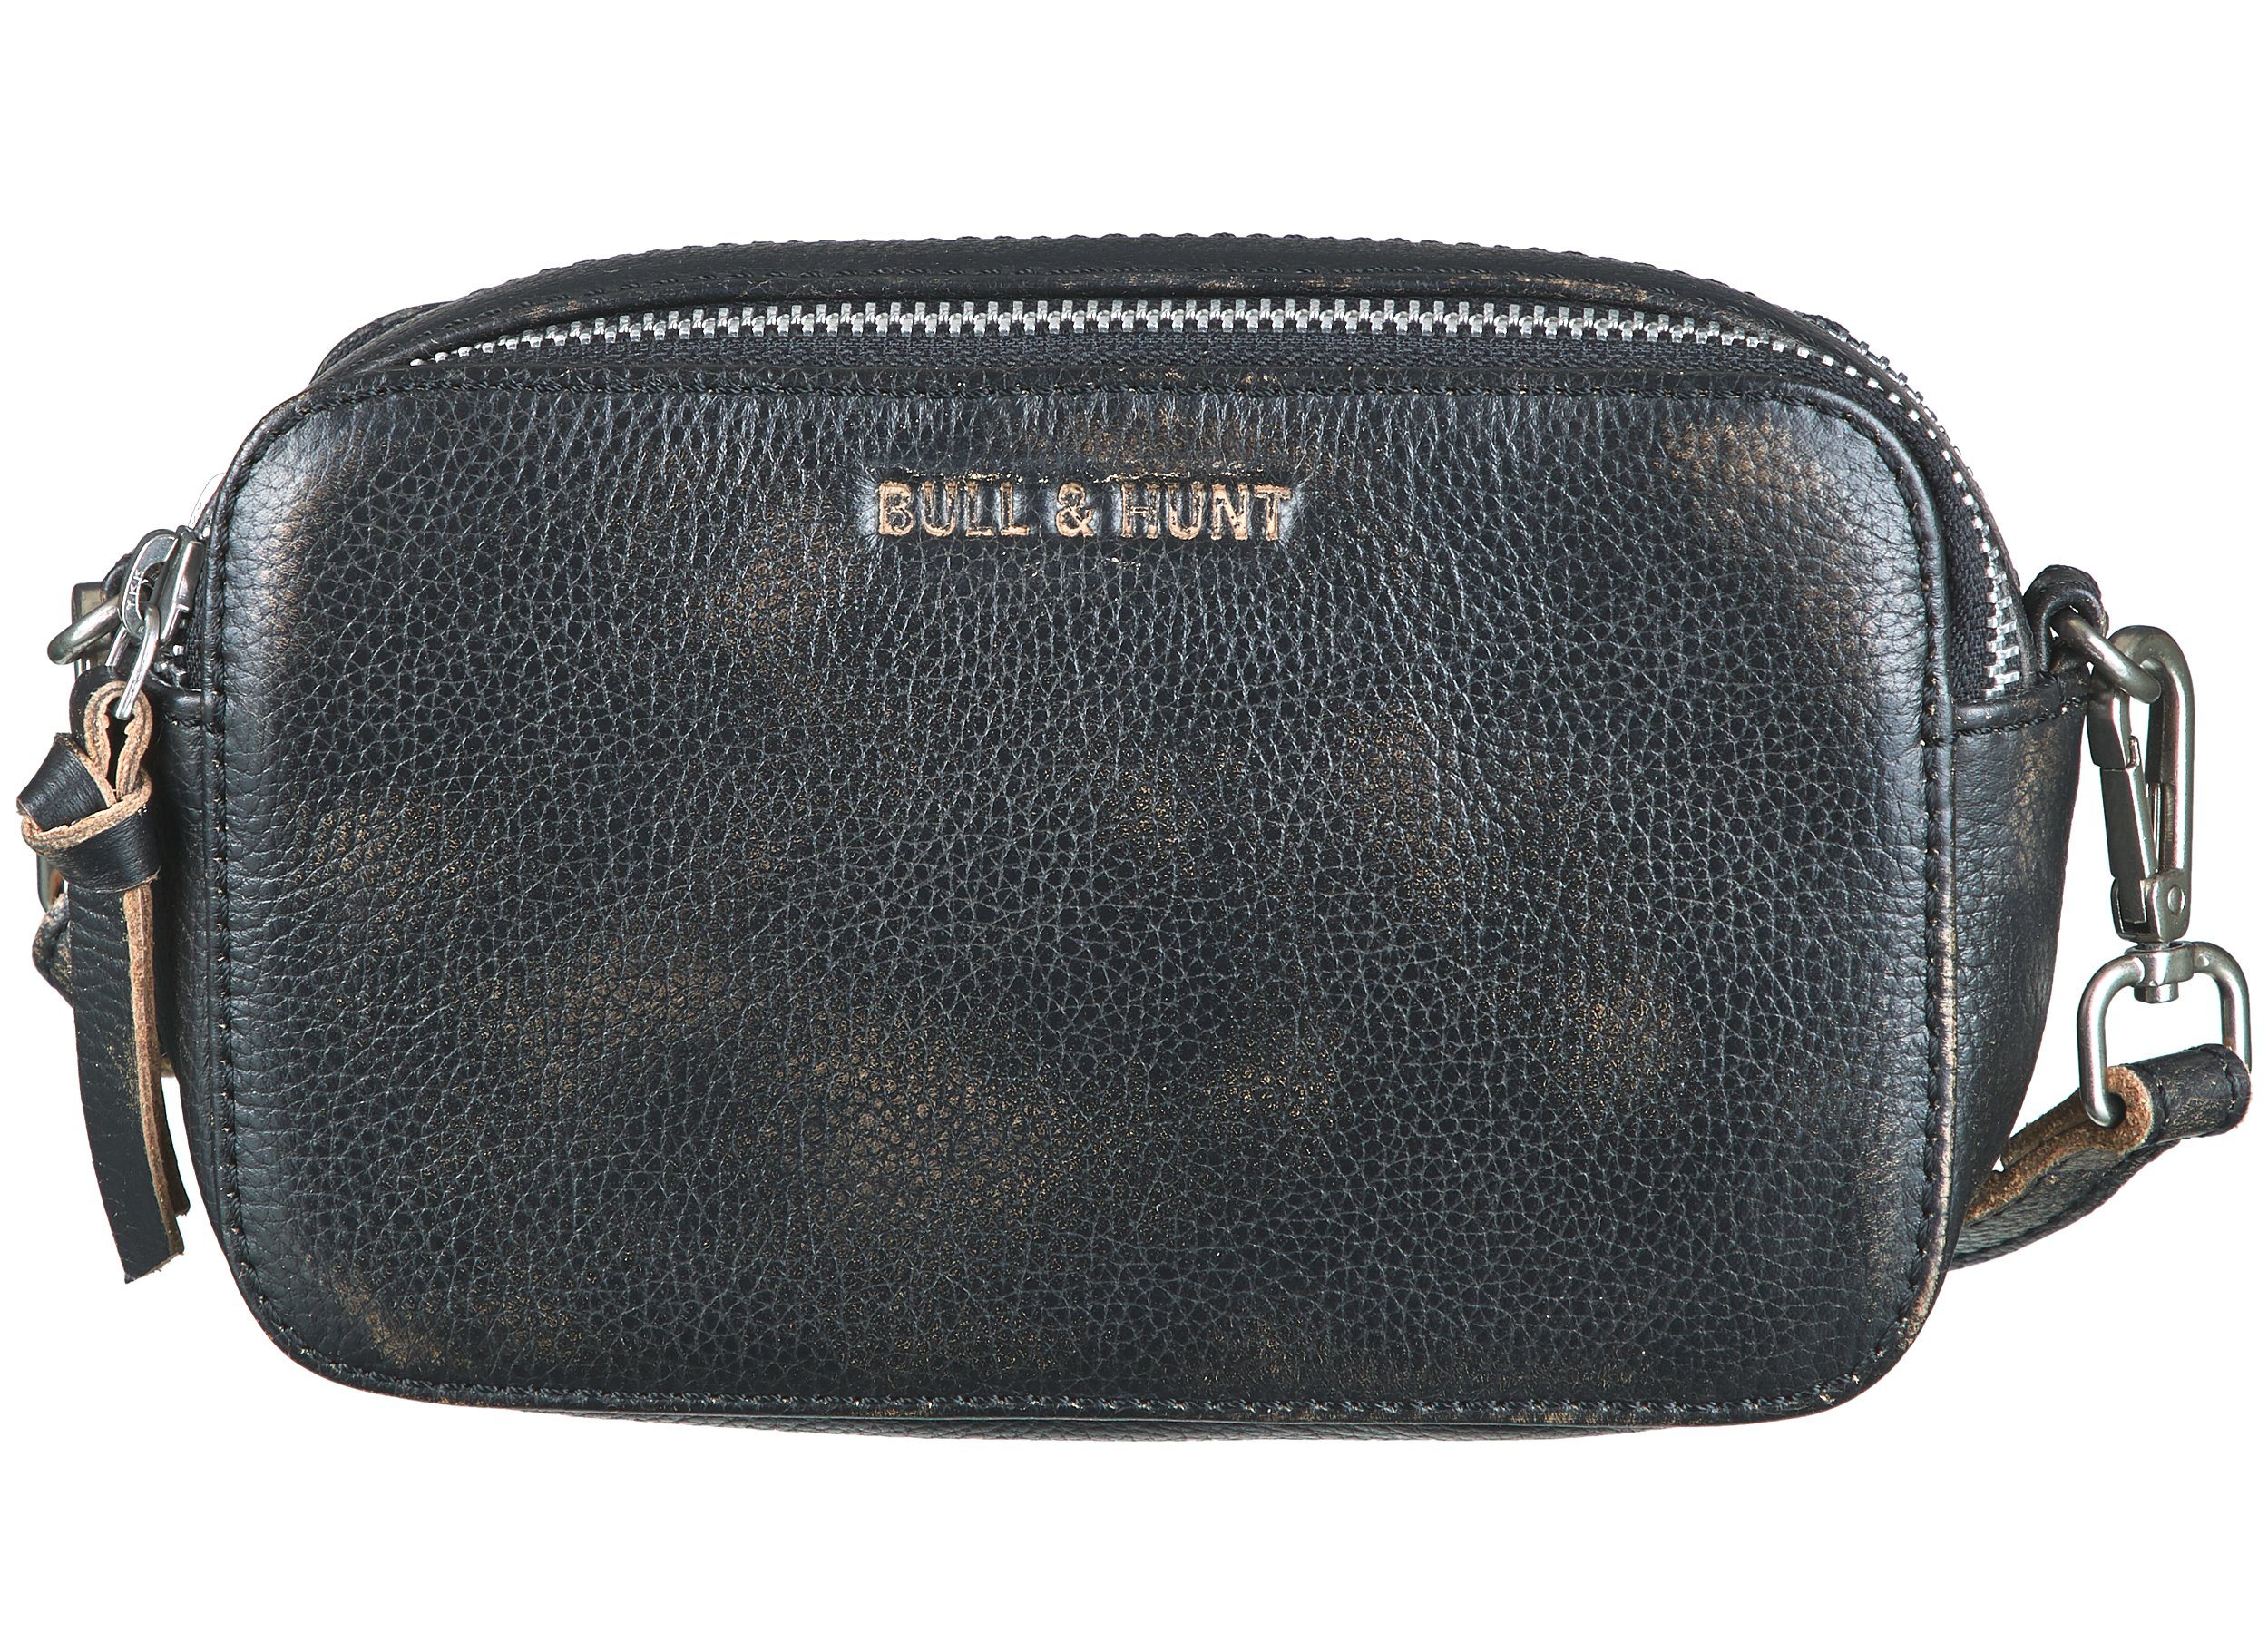 Bull & Hunt Handtasche microbag black distressed | Handtaschen